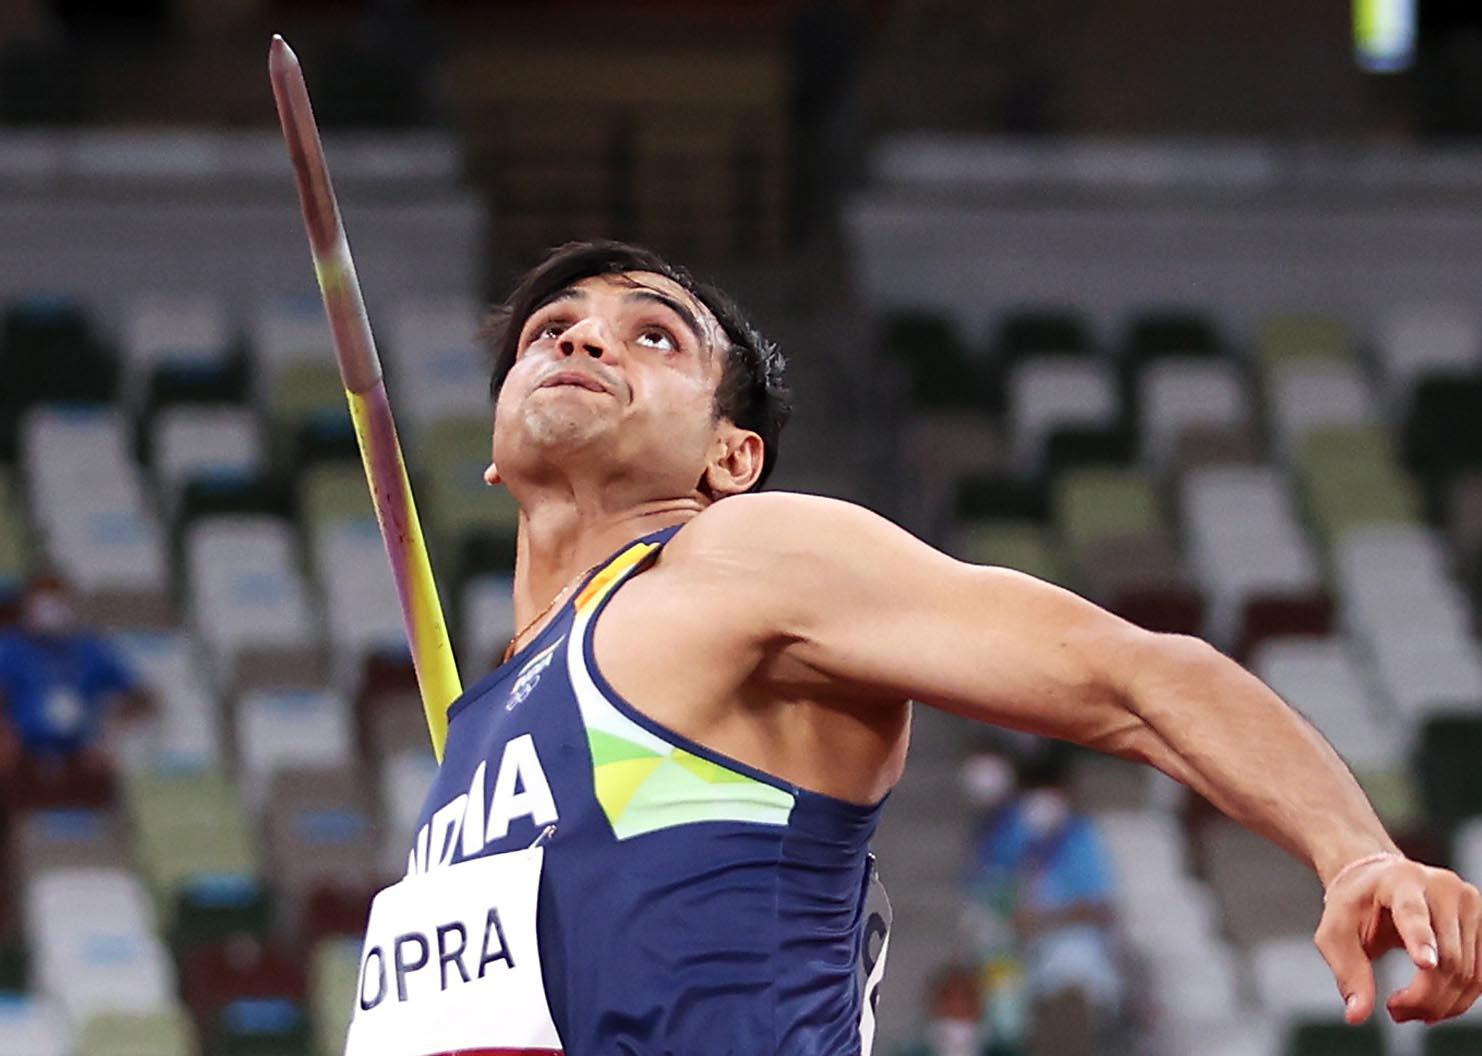 Olympic champion javelin thrower Neeraj Chopra wins at Kuortane Games after beating reigning world champion